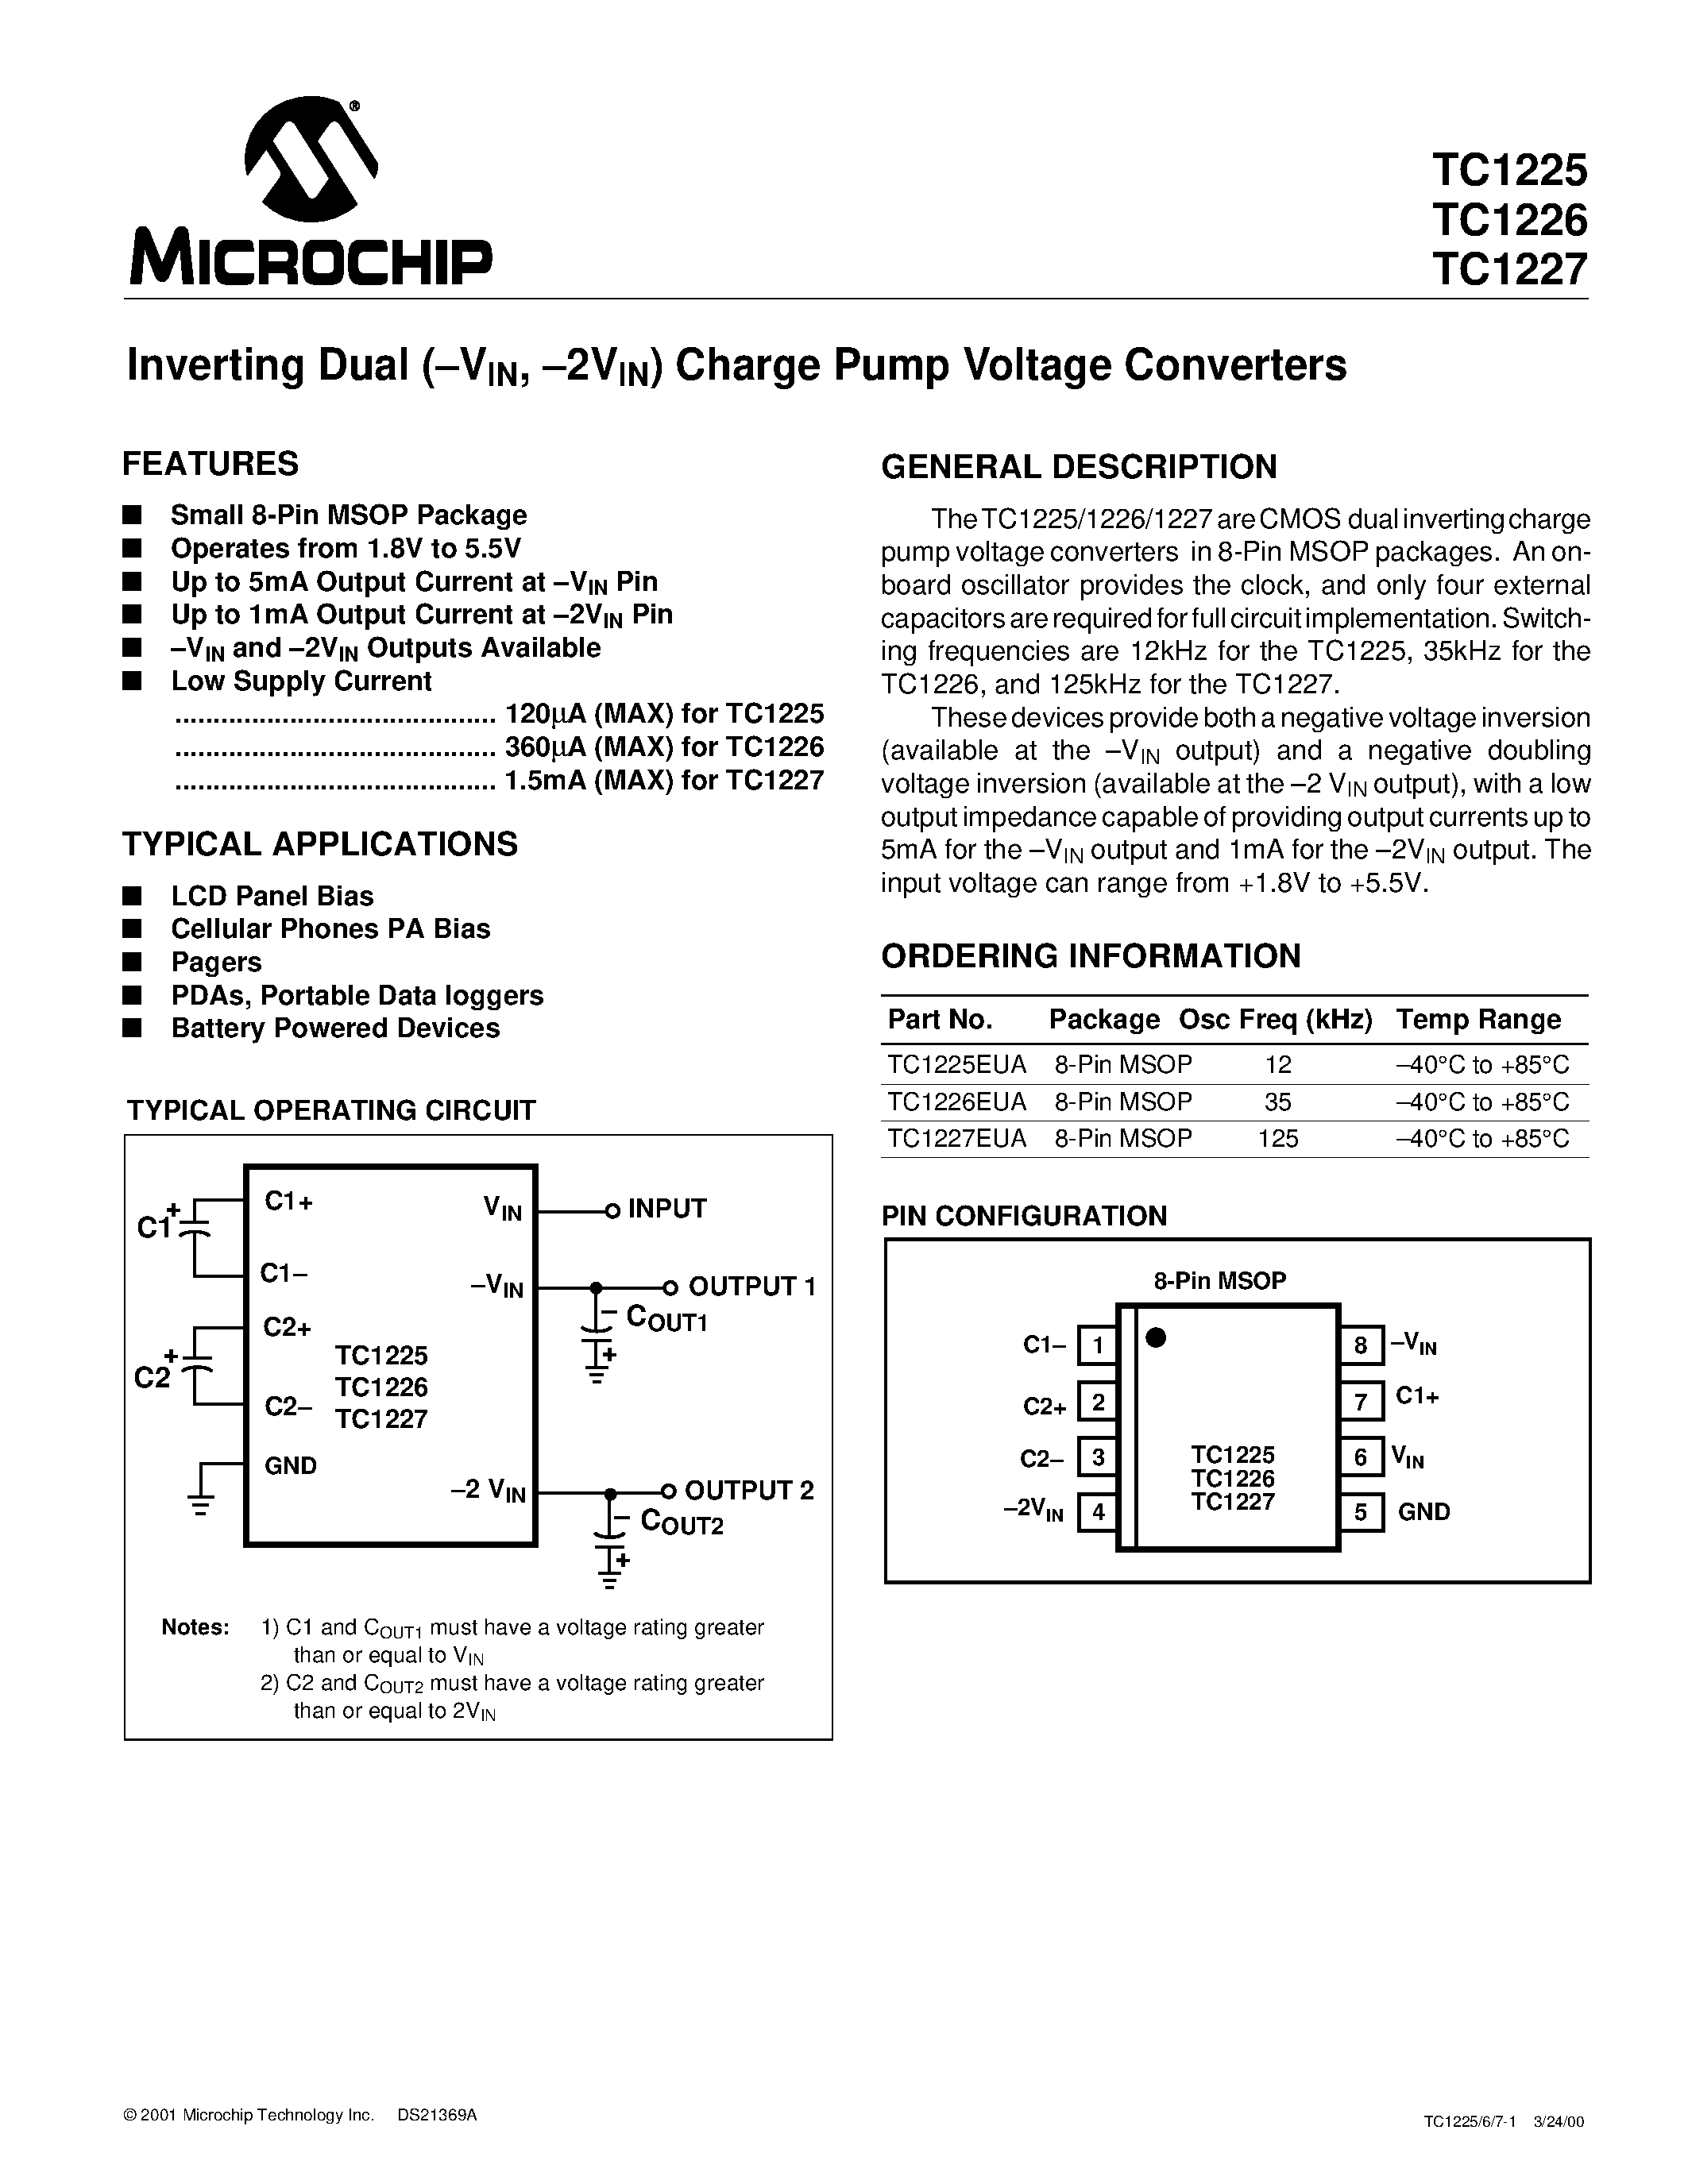 Datasheet TC1225 - (TC1225 / TC1226 / TC1227) Inverting Dual Charge Pump Voltage Converters page 1